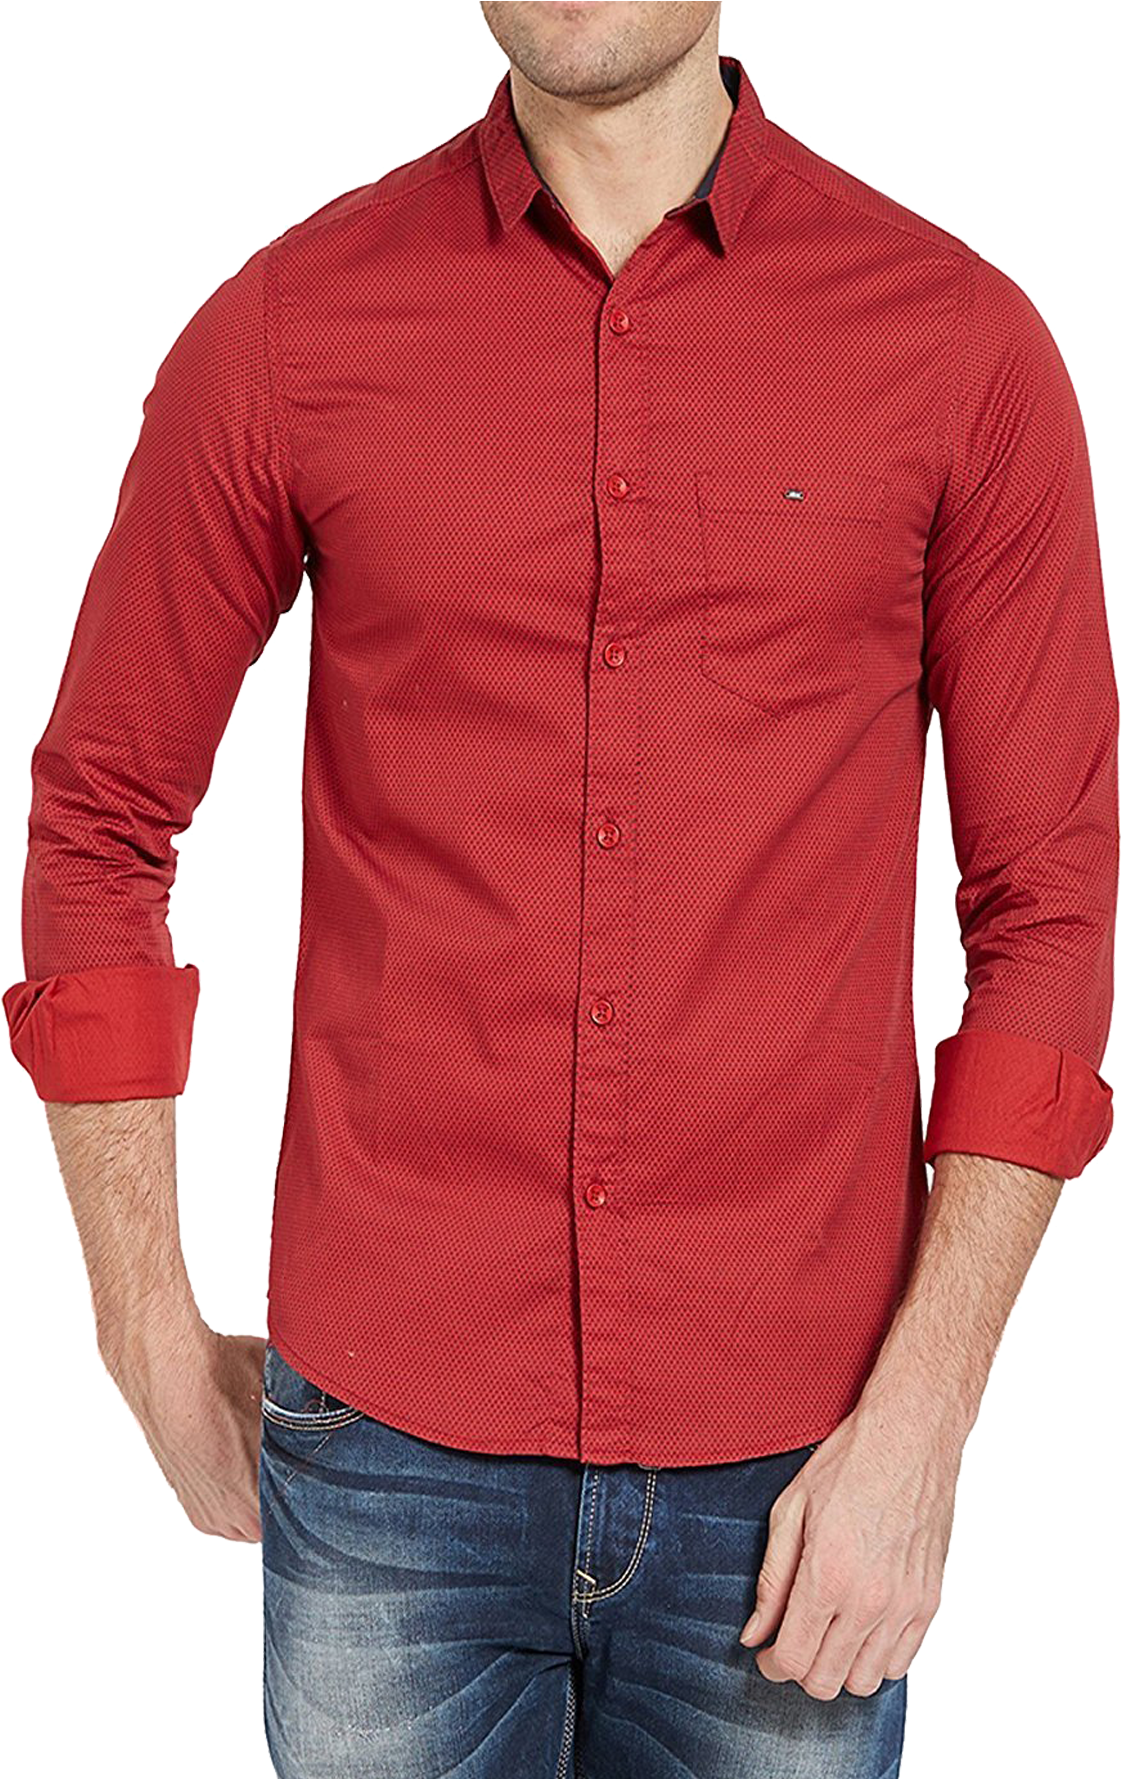 Casual Shirt - Mens Red Quarter Zip Sweater (1333x1778), Png Download